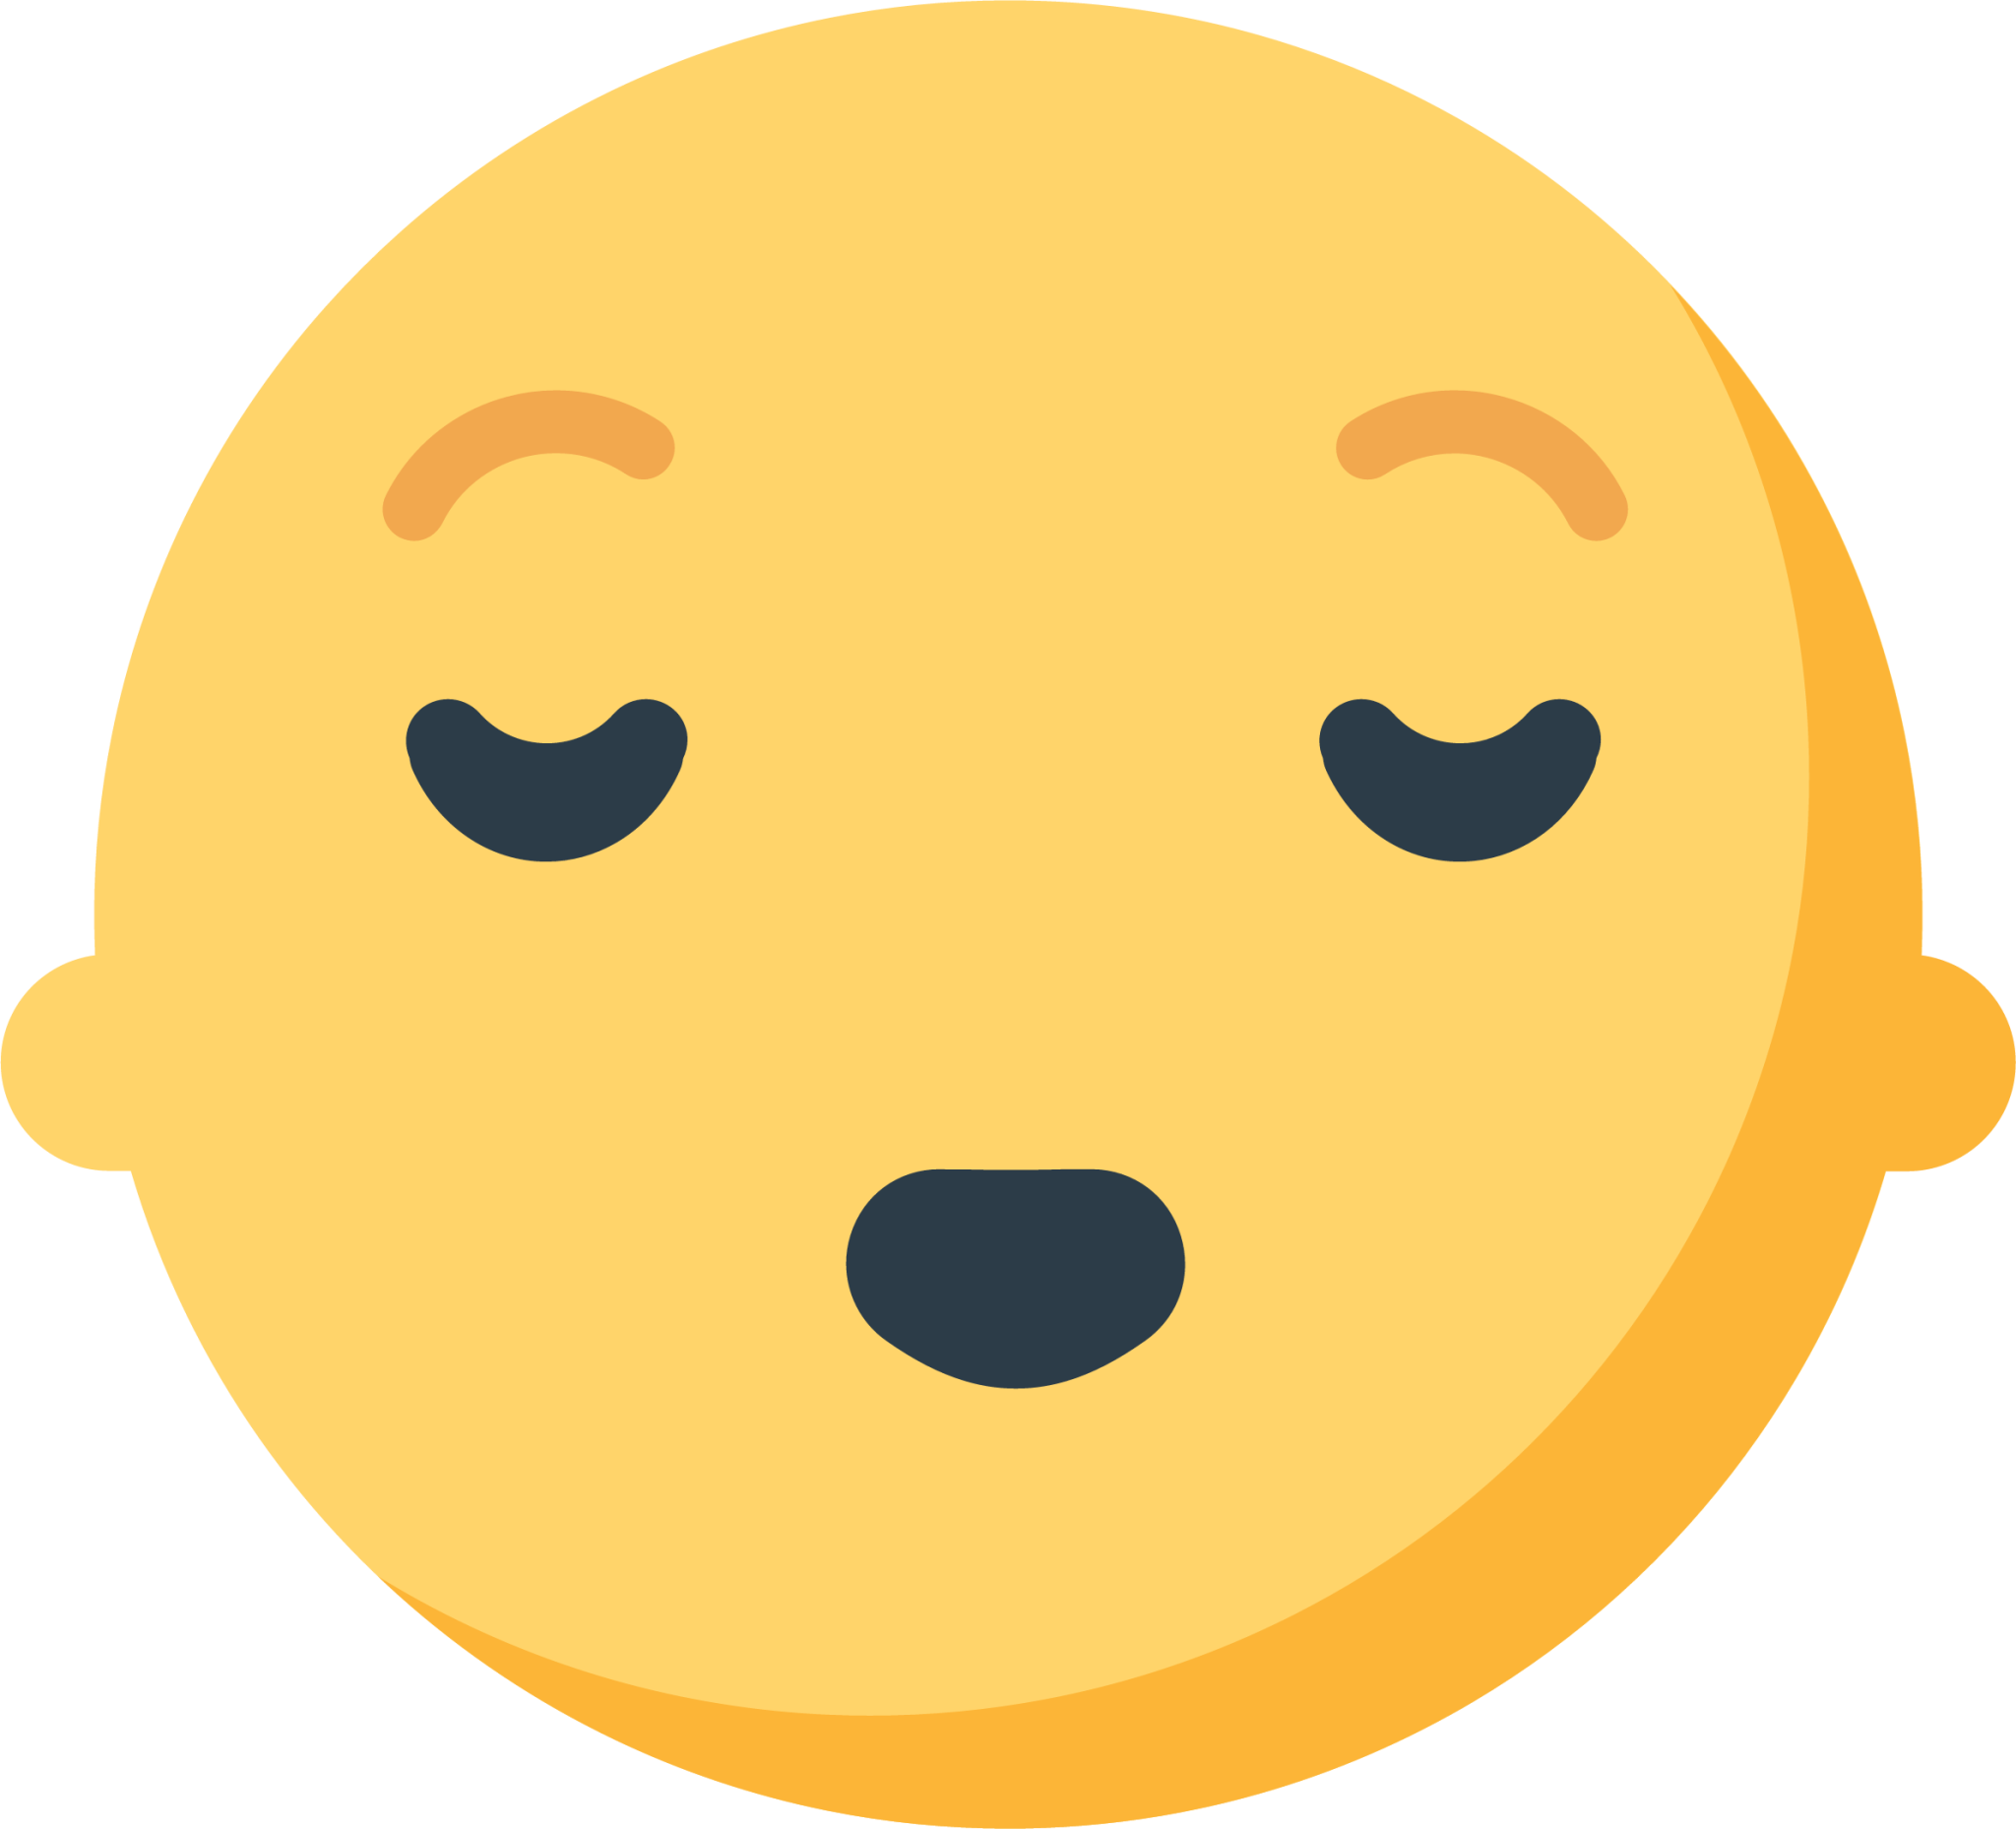 relieved face emoji